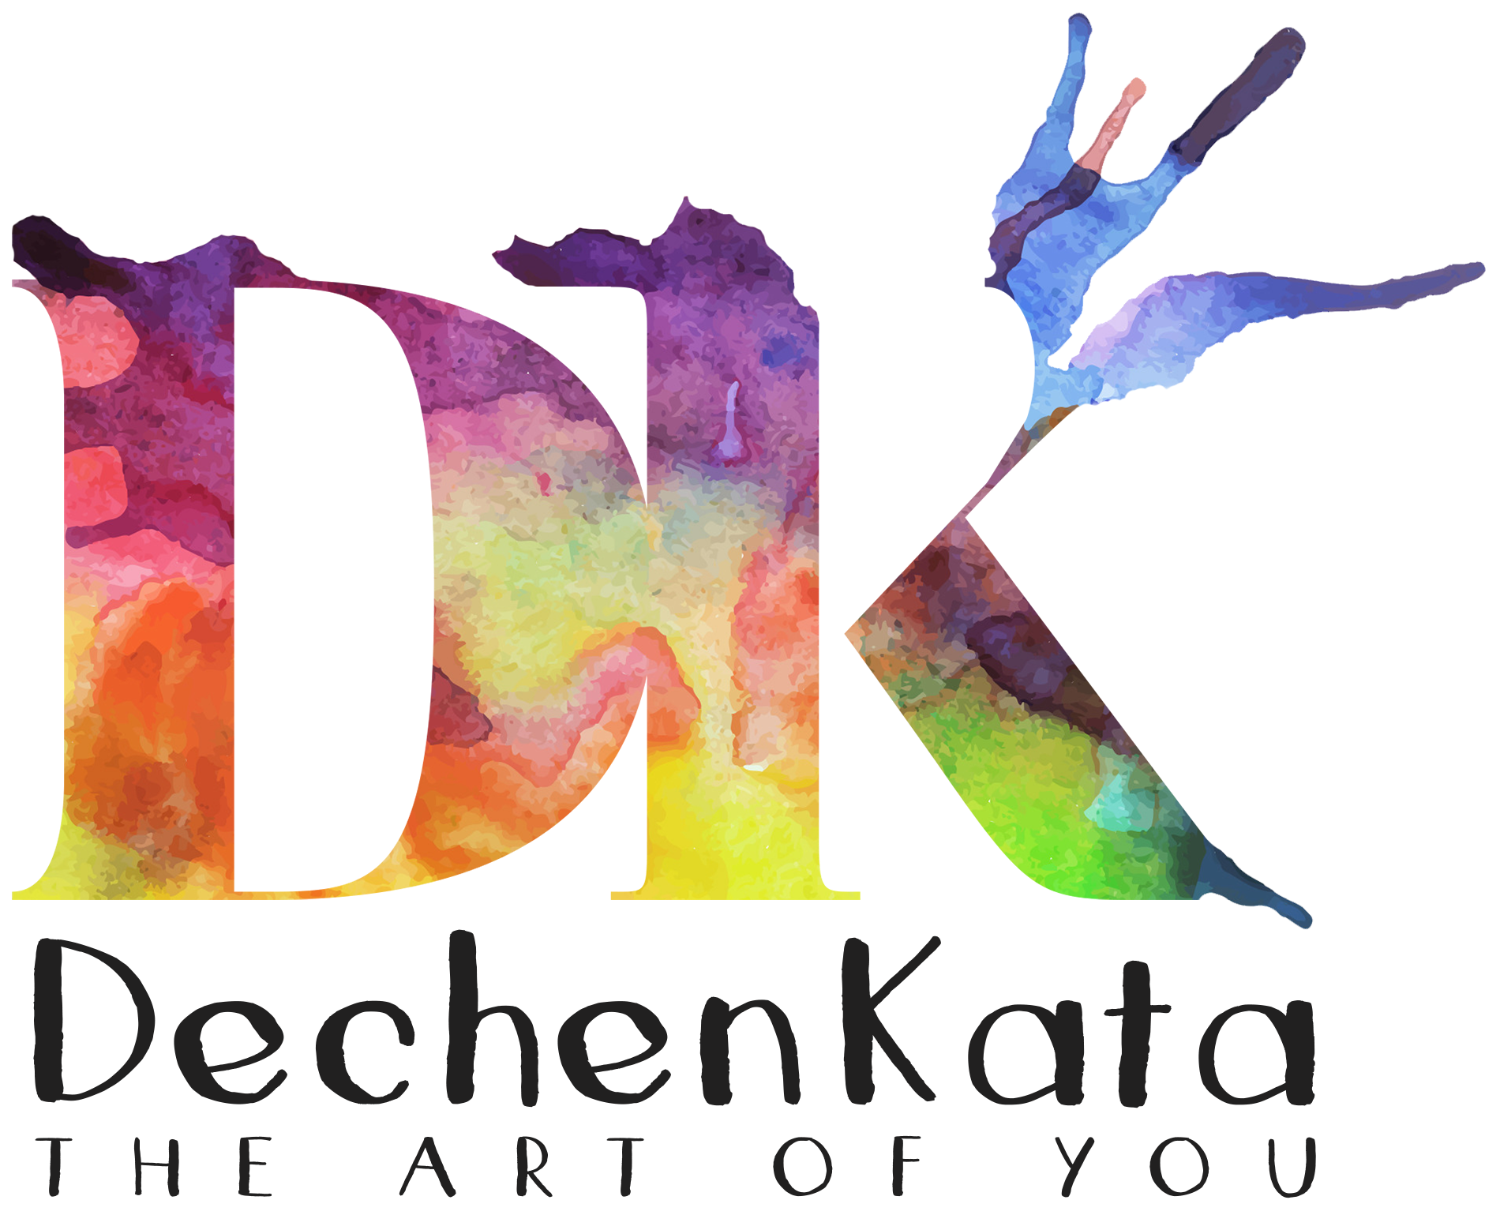 Dechenkata -The Art of You